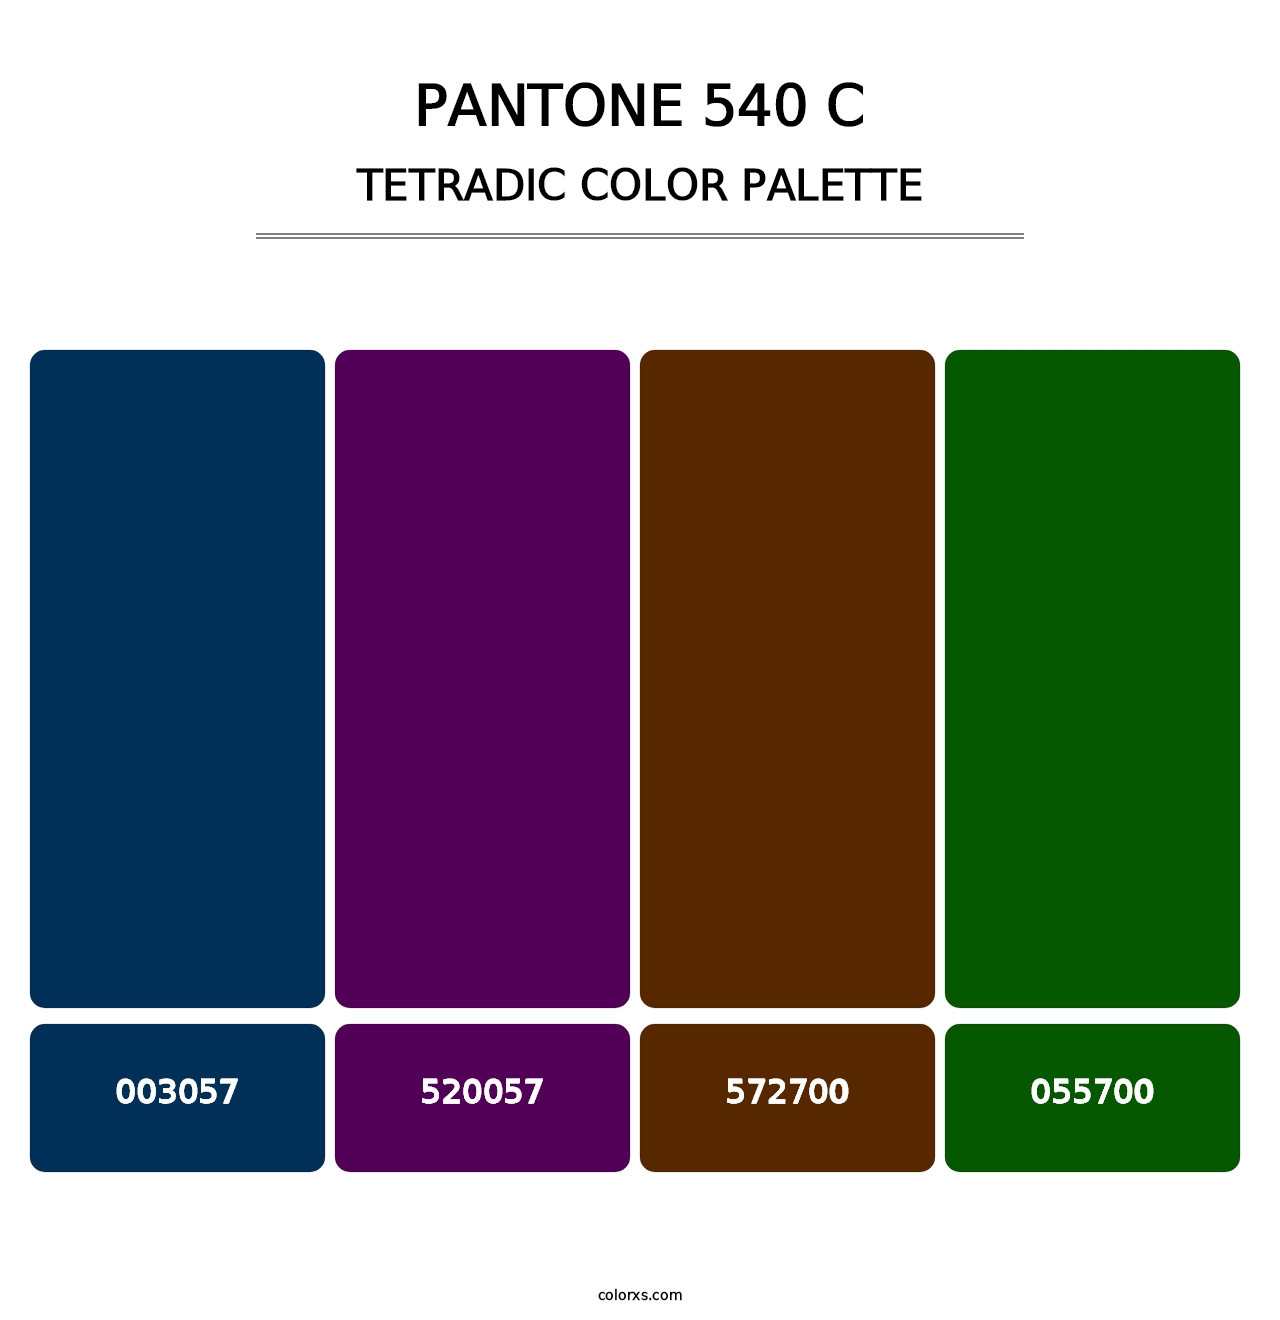 PANTONE 540 C - Tetradic Color Palette